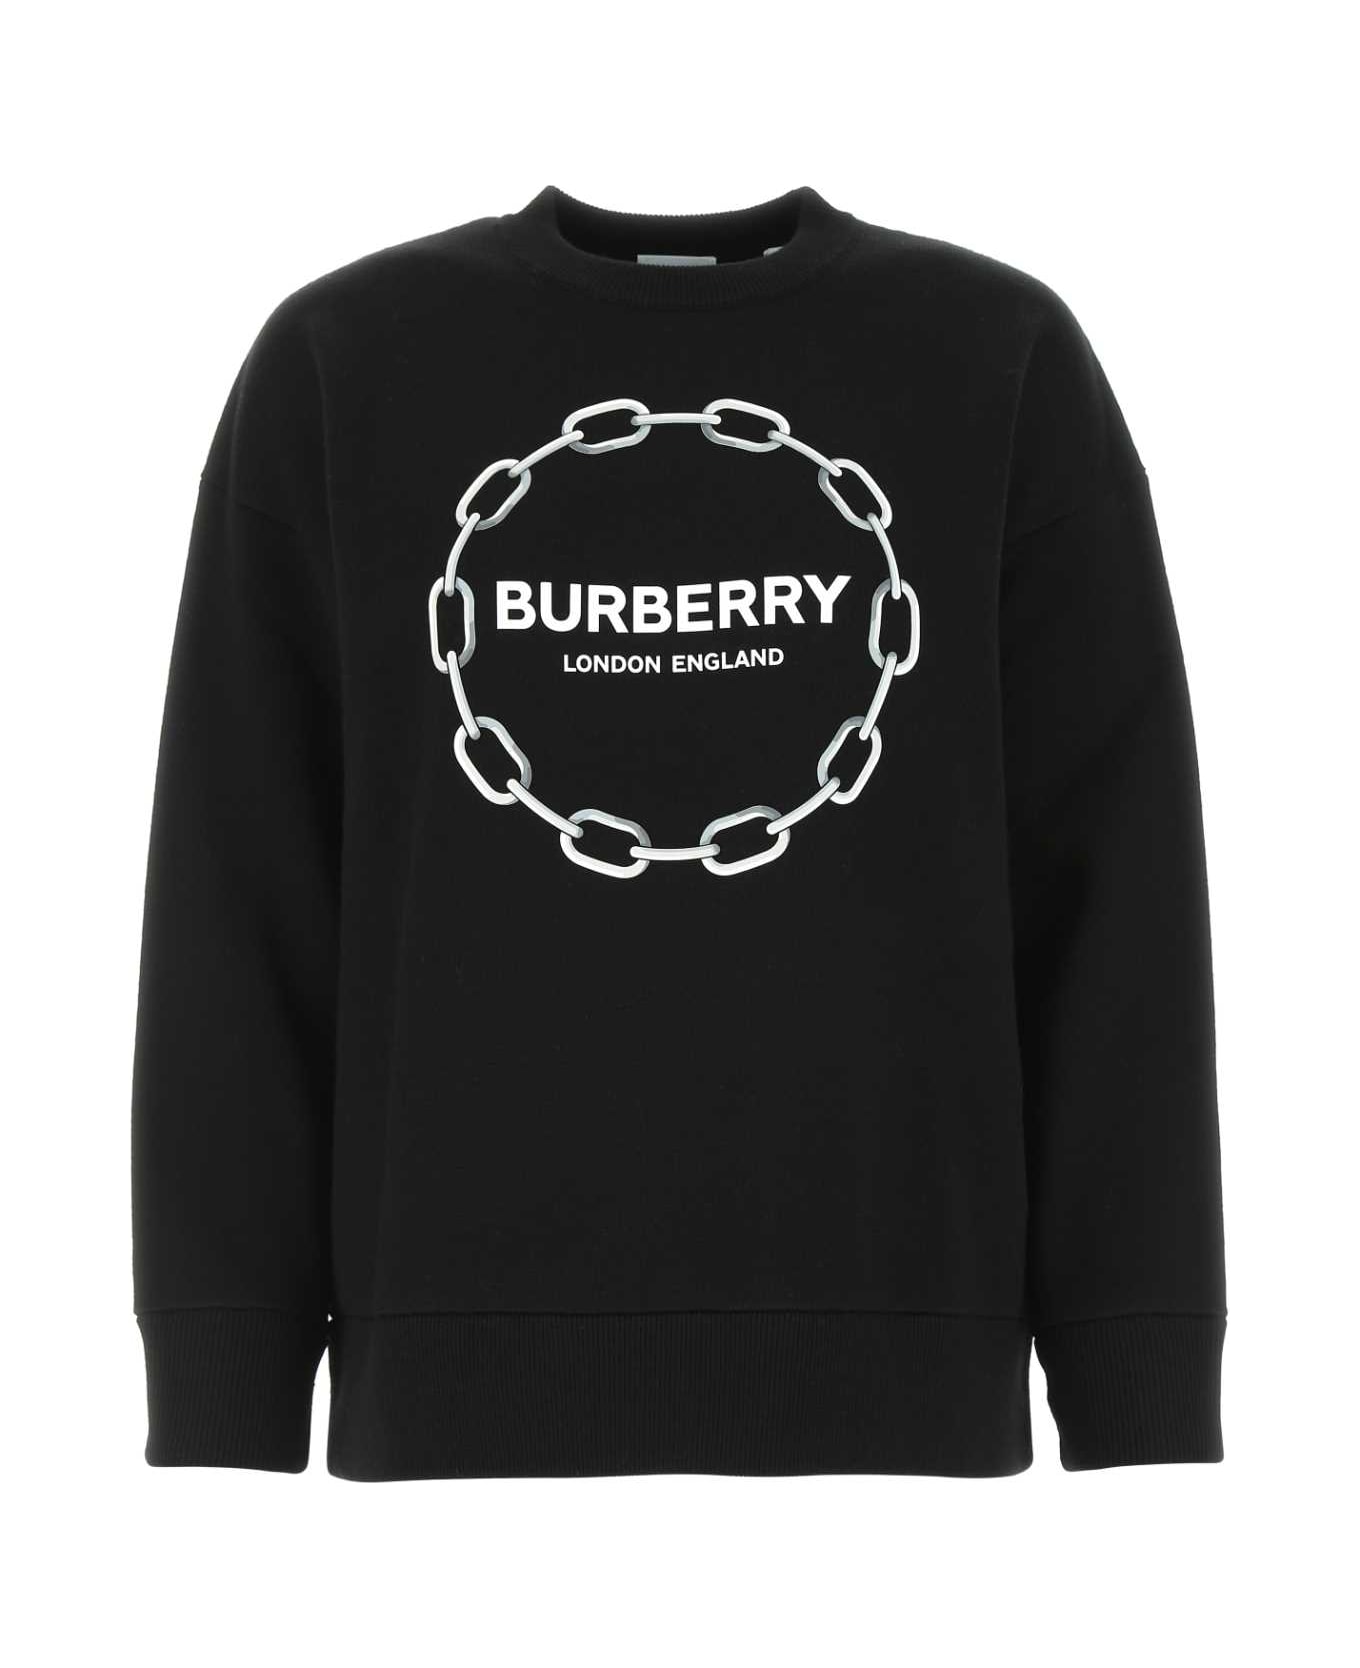 Burberry Black Stretch Wool Blend Sweater - A1189